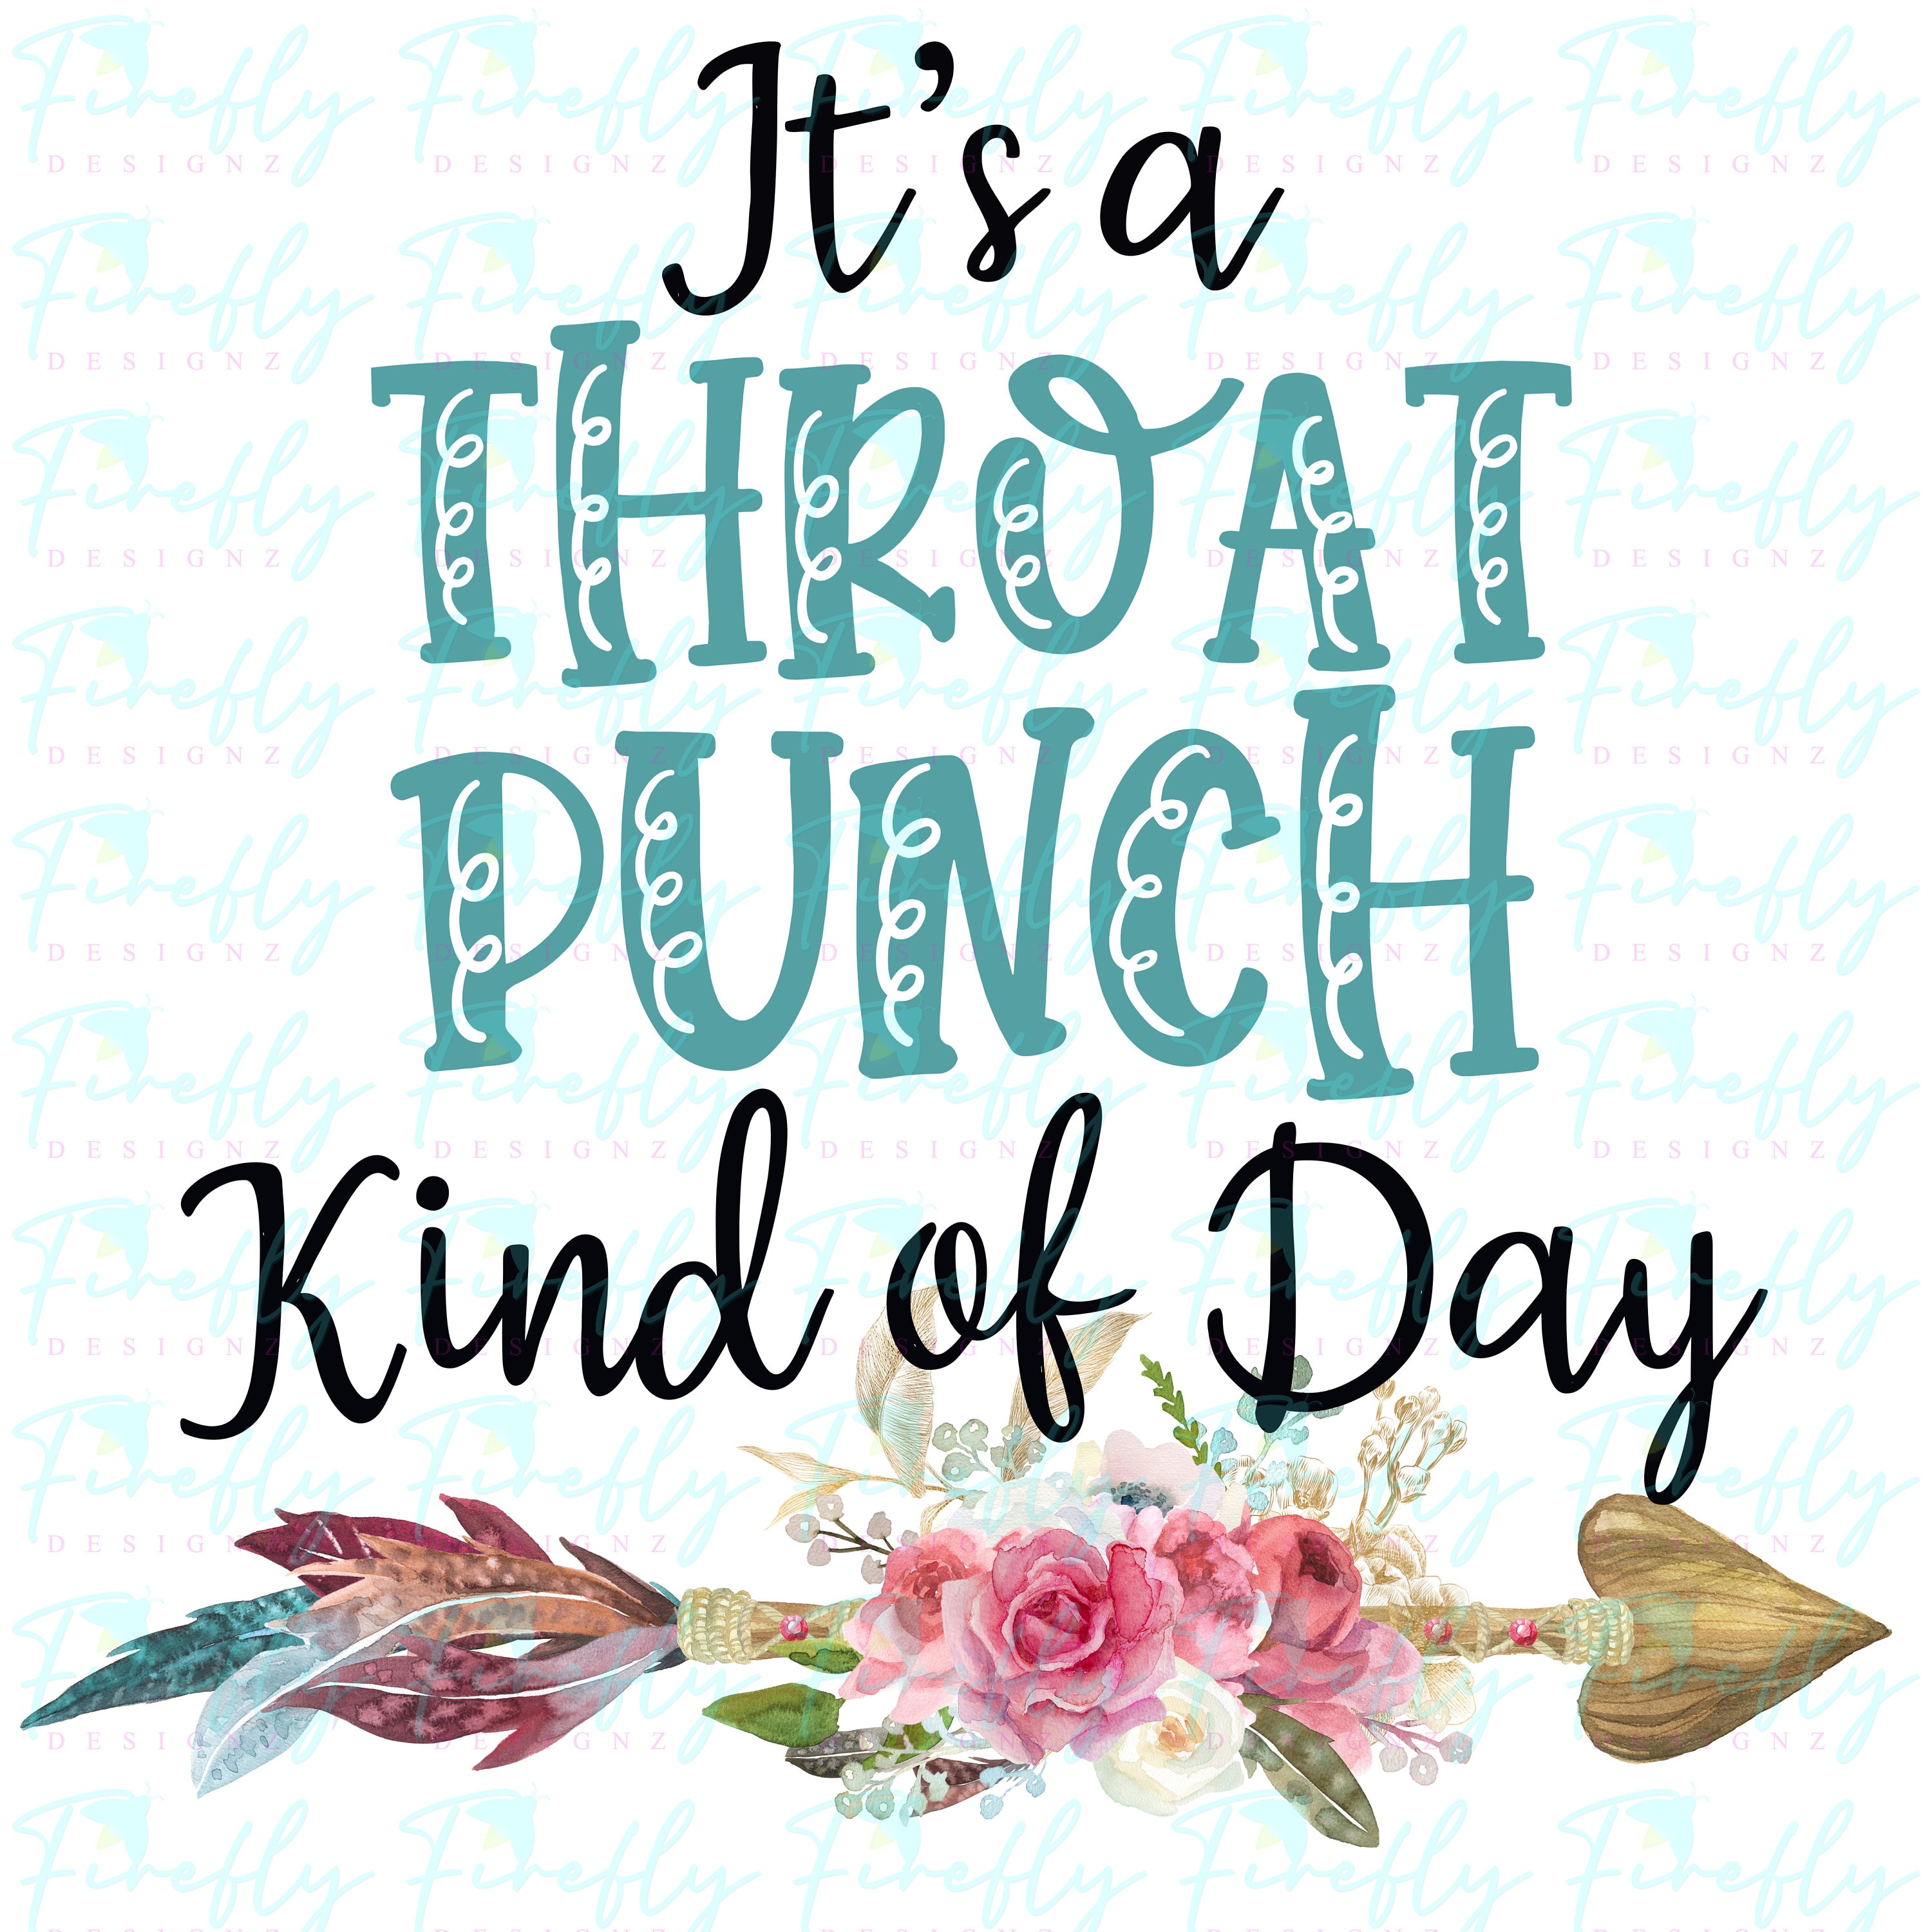 Throat Punch Thursday Pens - CRU10-PG14-13031 – Fair Dinkum Gifts